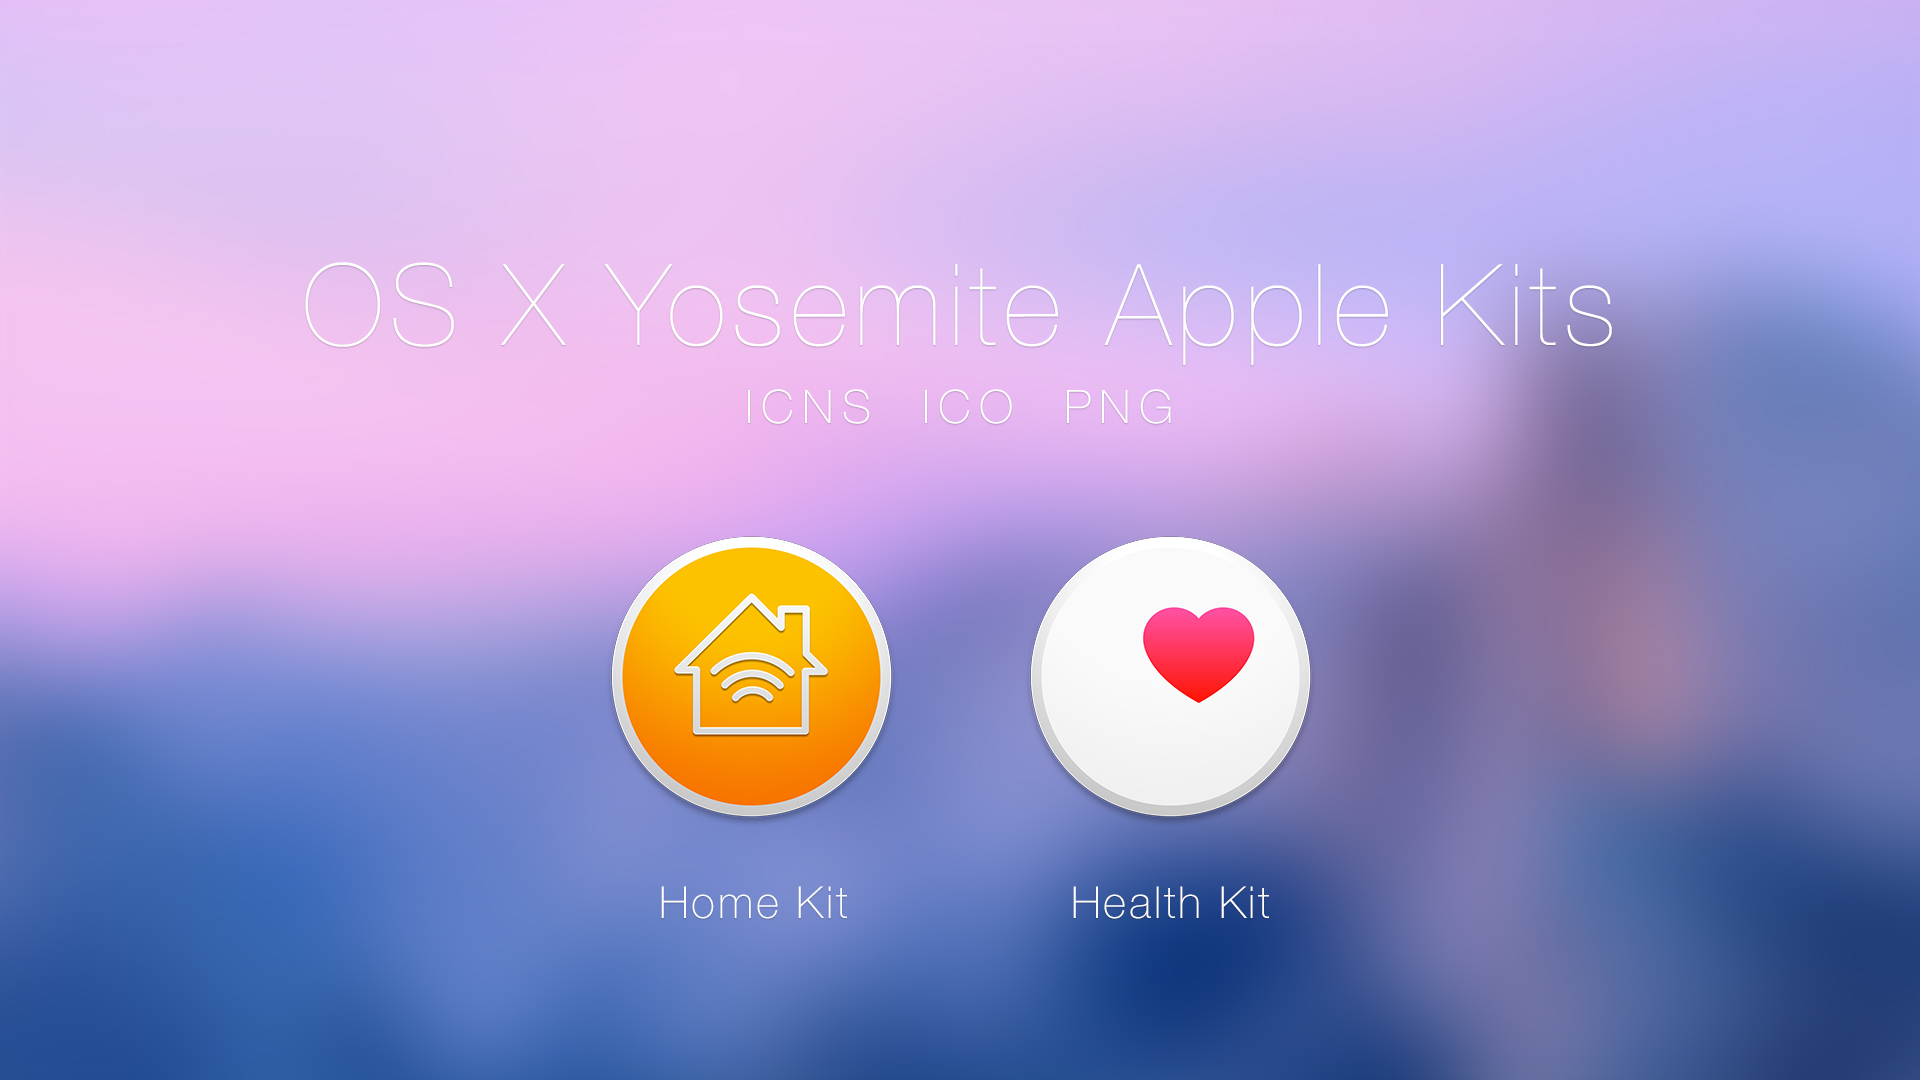 OS X Yosemite Home Kit and Health Kit